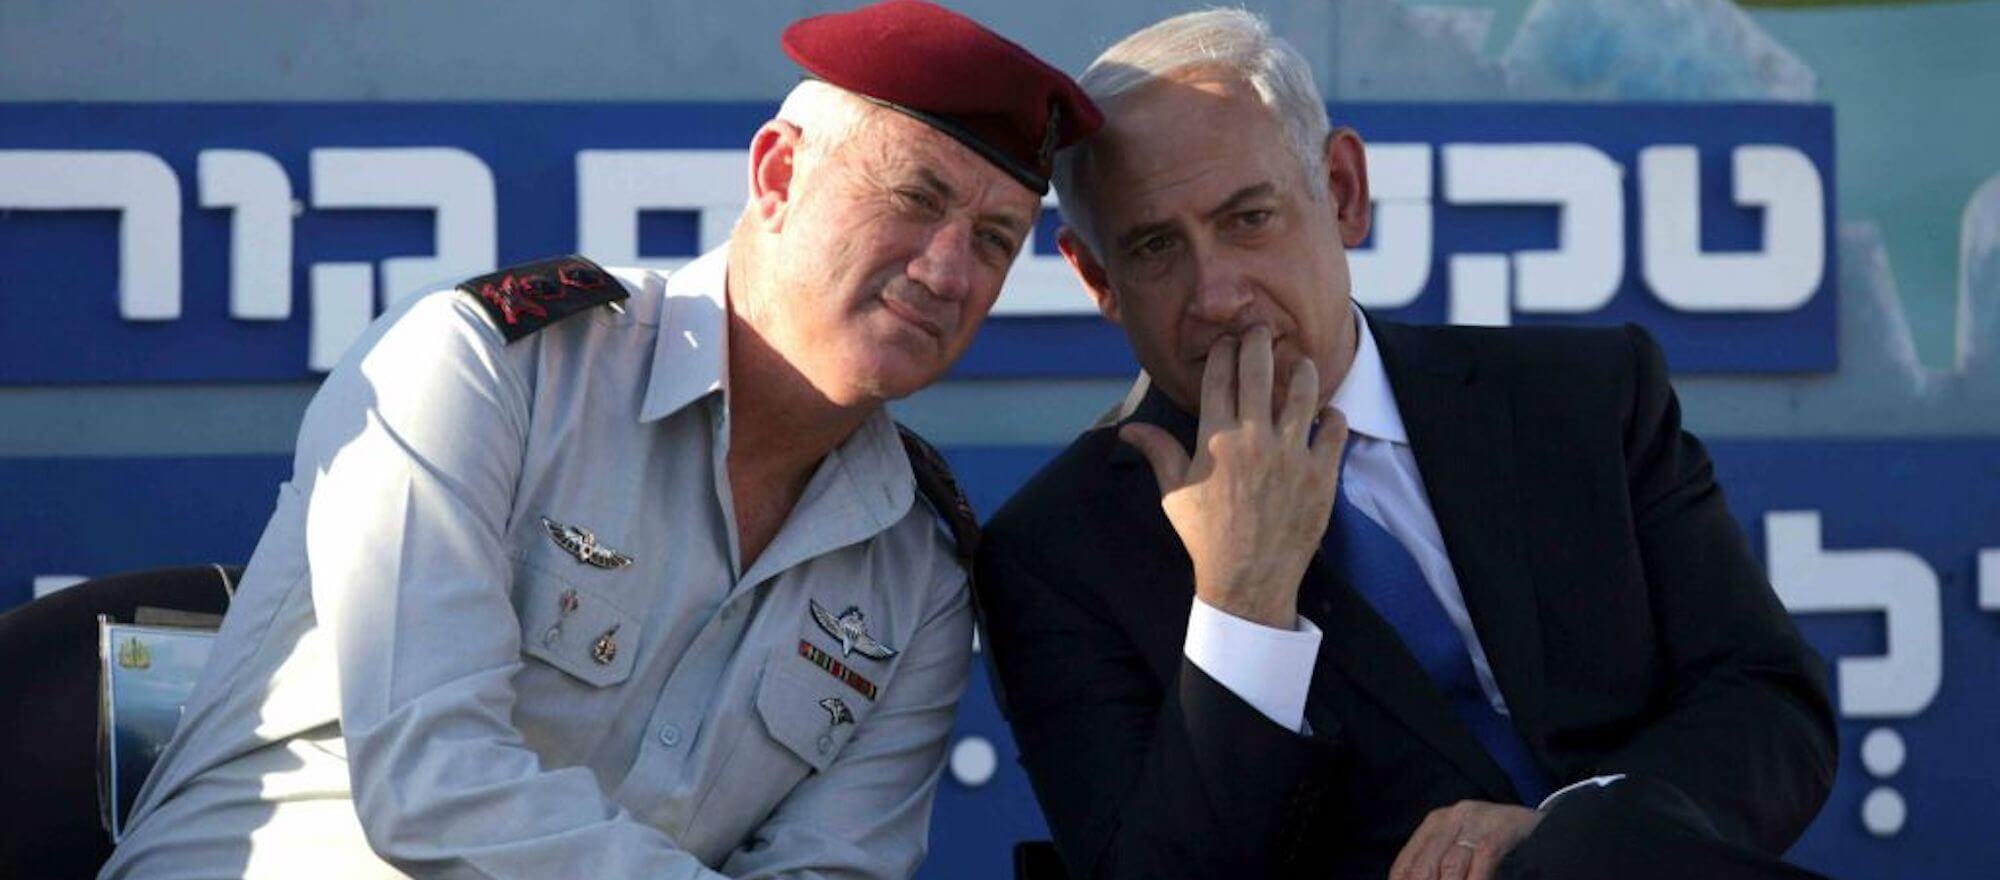 Then-IDF chief of staff Lt. Gen. Benny Gantz, left, with Prime Minister Benjamin Netanyahu at a Navy ceremony on September 11, 2013. (AP Photo/Dan Balilty)